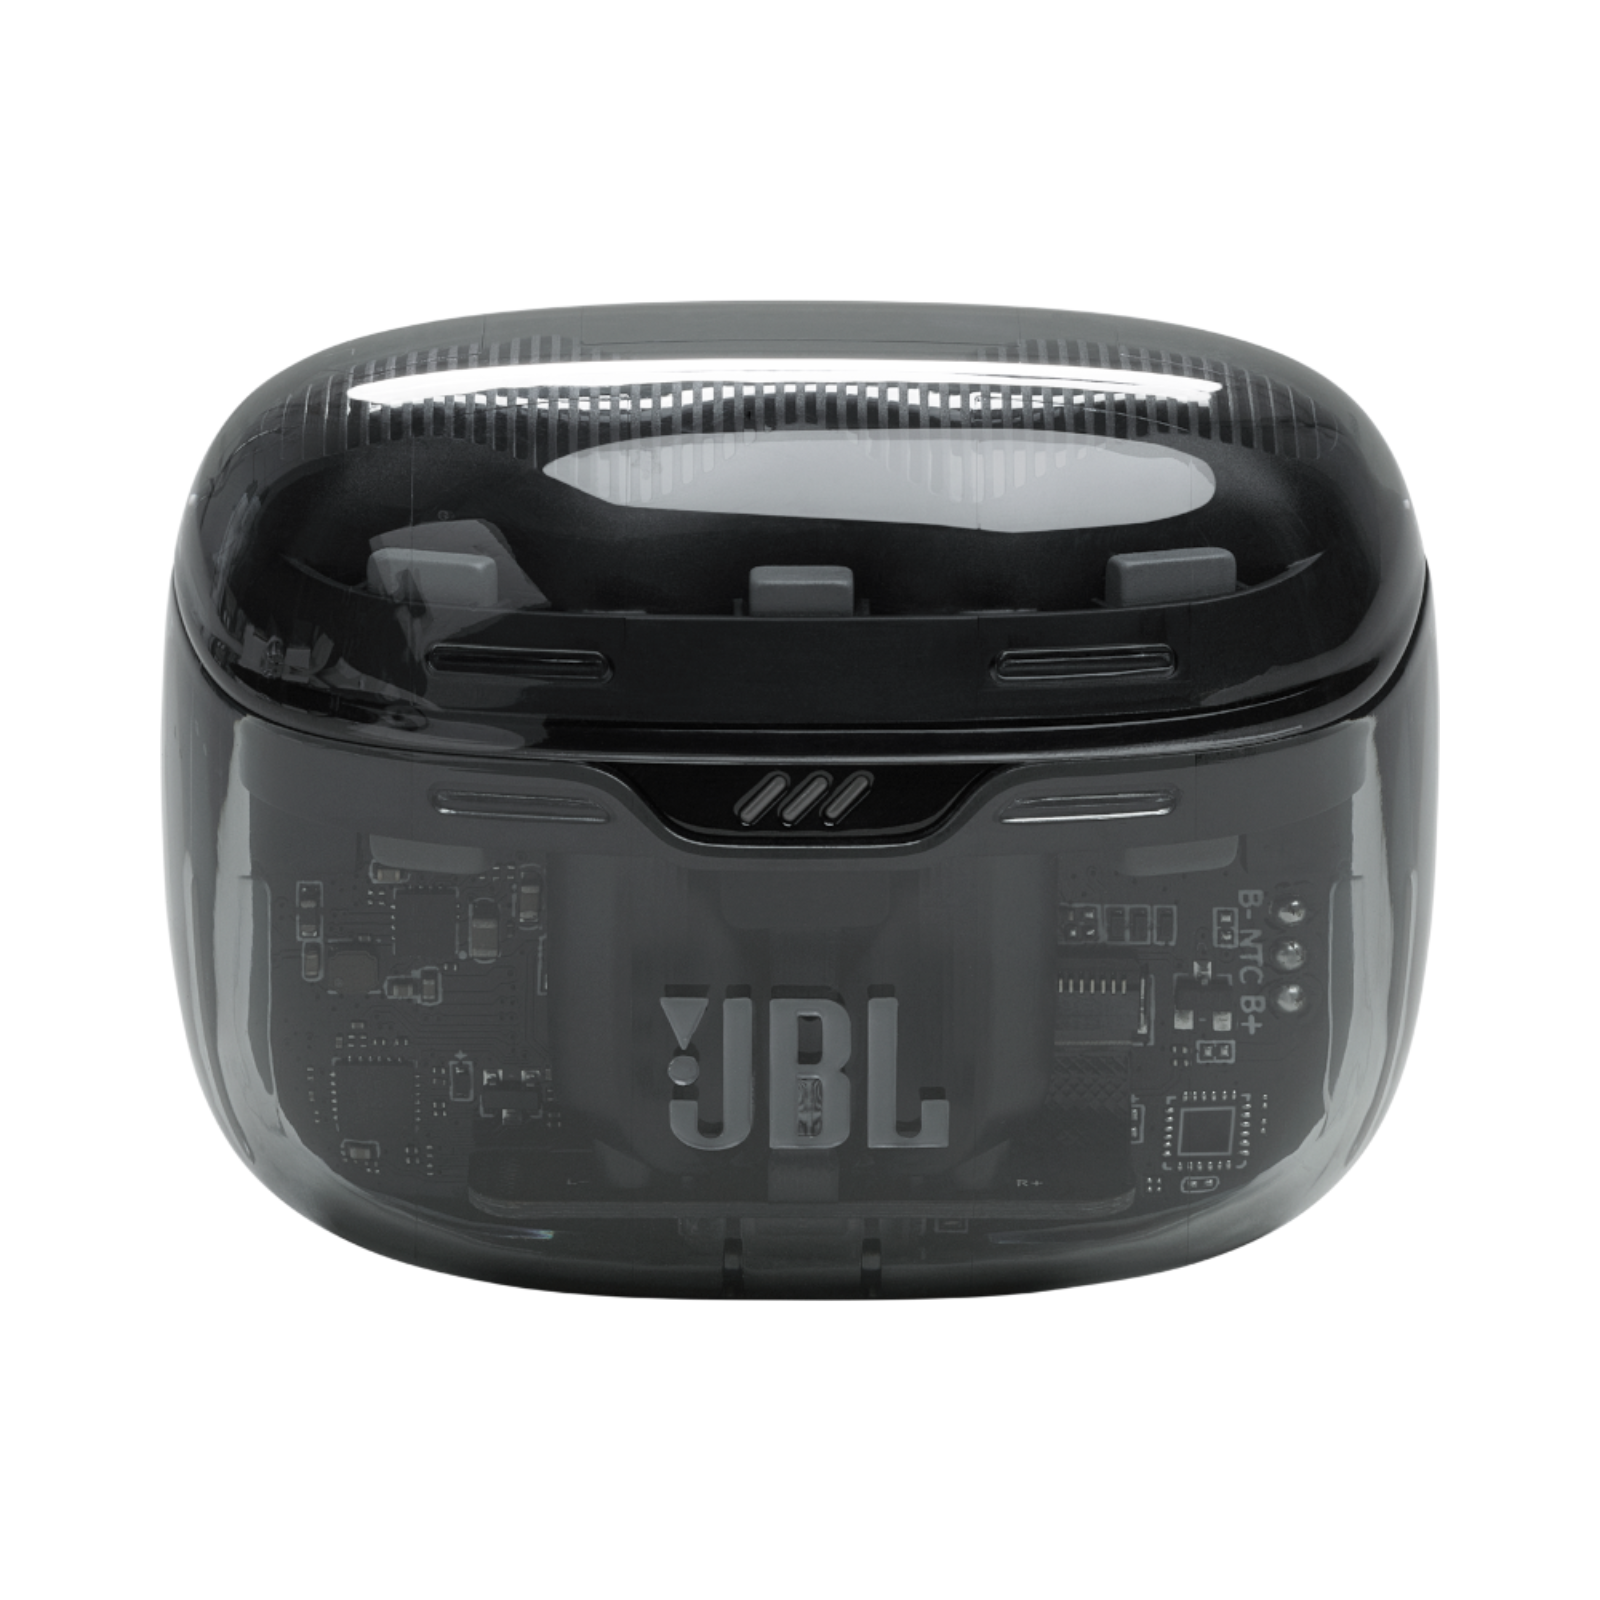 JBL Tune Beam TWS True Wireless Noise Cancelling Earbuds